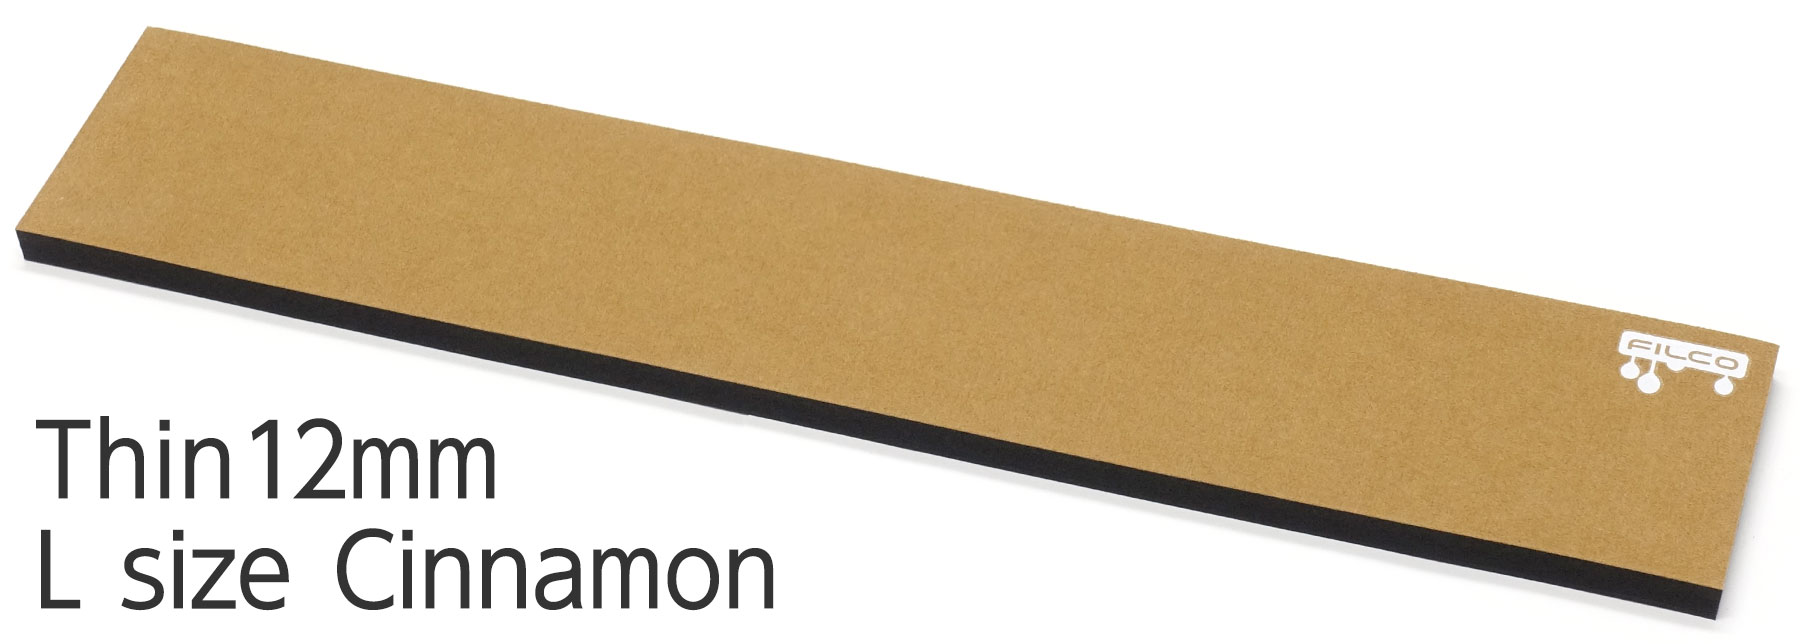 FILCO Majestouch Wrist Rest "Macaron" Thin 12mm / L size / Cinnamon